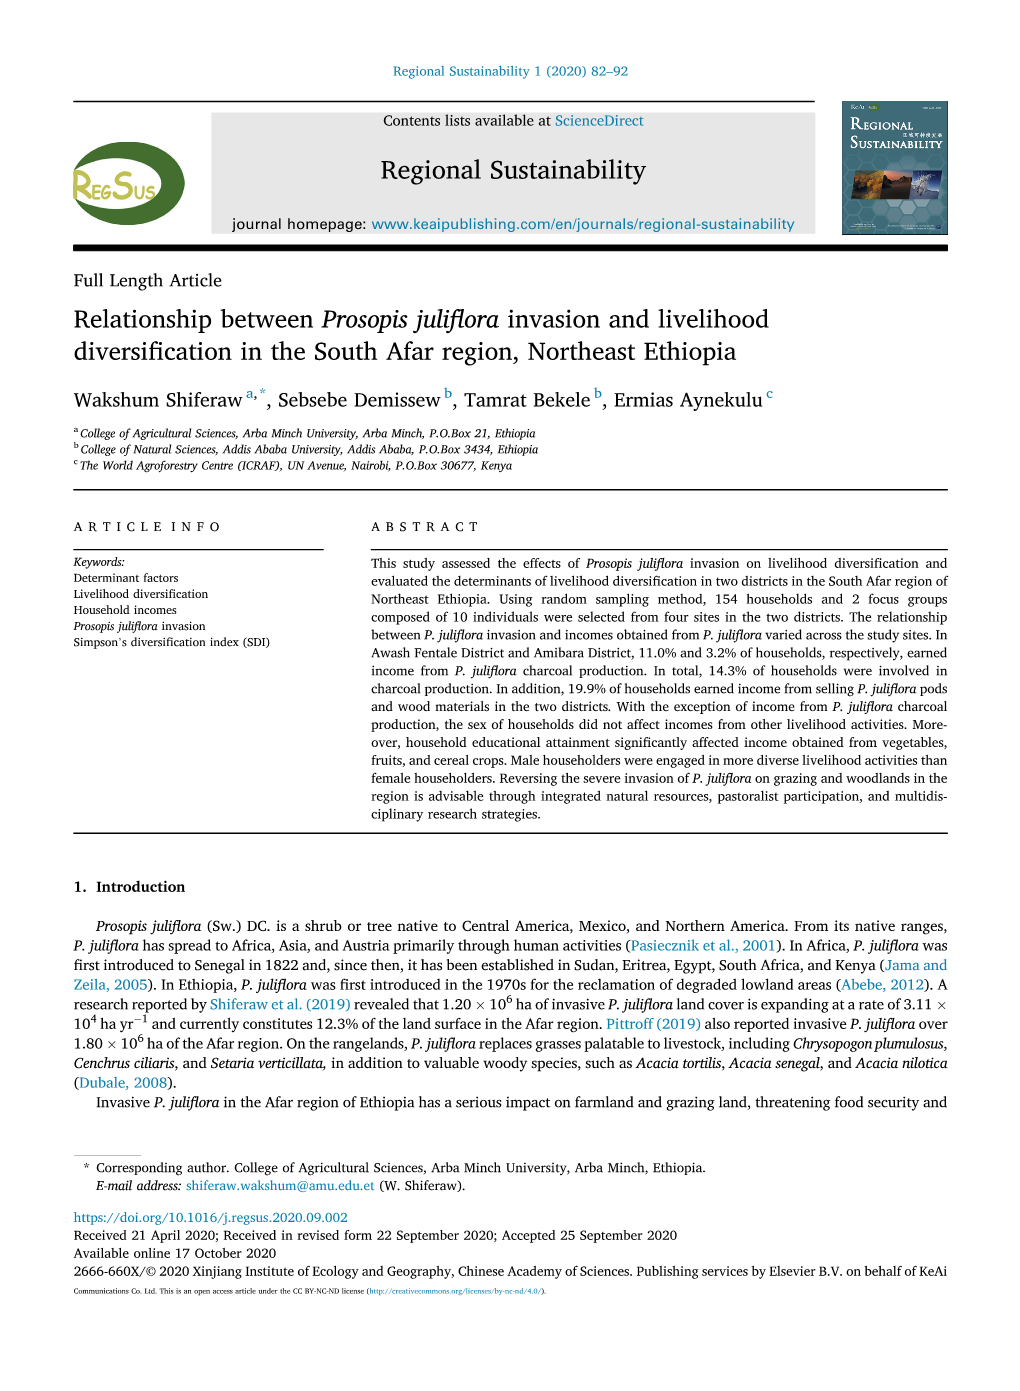 Relationship Between Prosopis Juliflora Invasion and Livelihood Diversification in the South Afar Region, Northeast Ethiopia